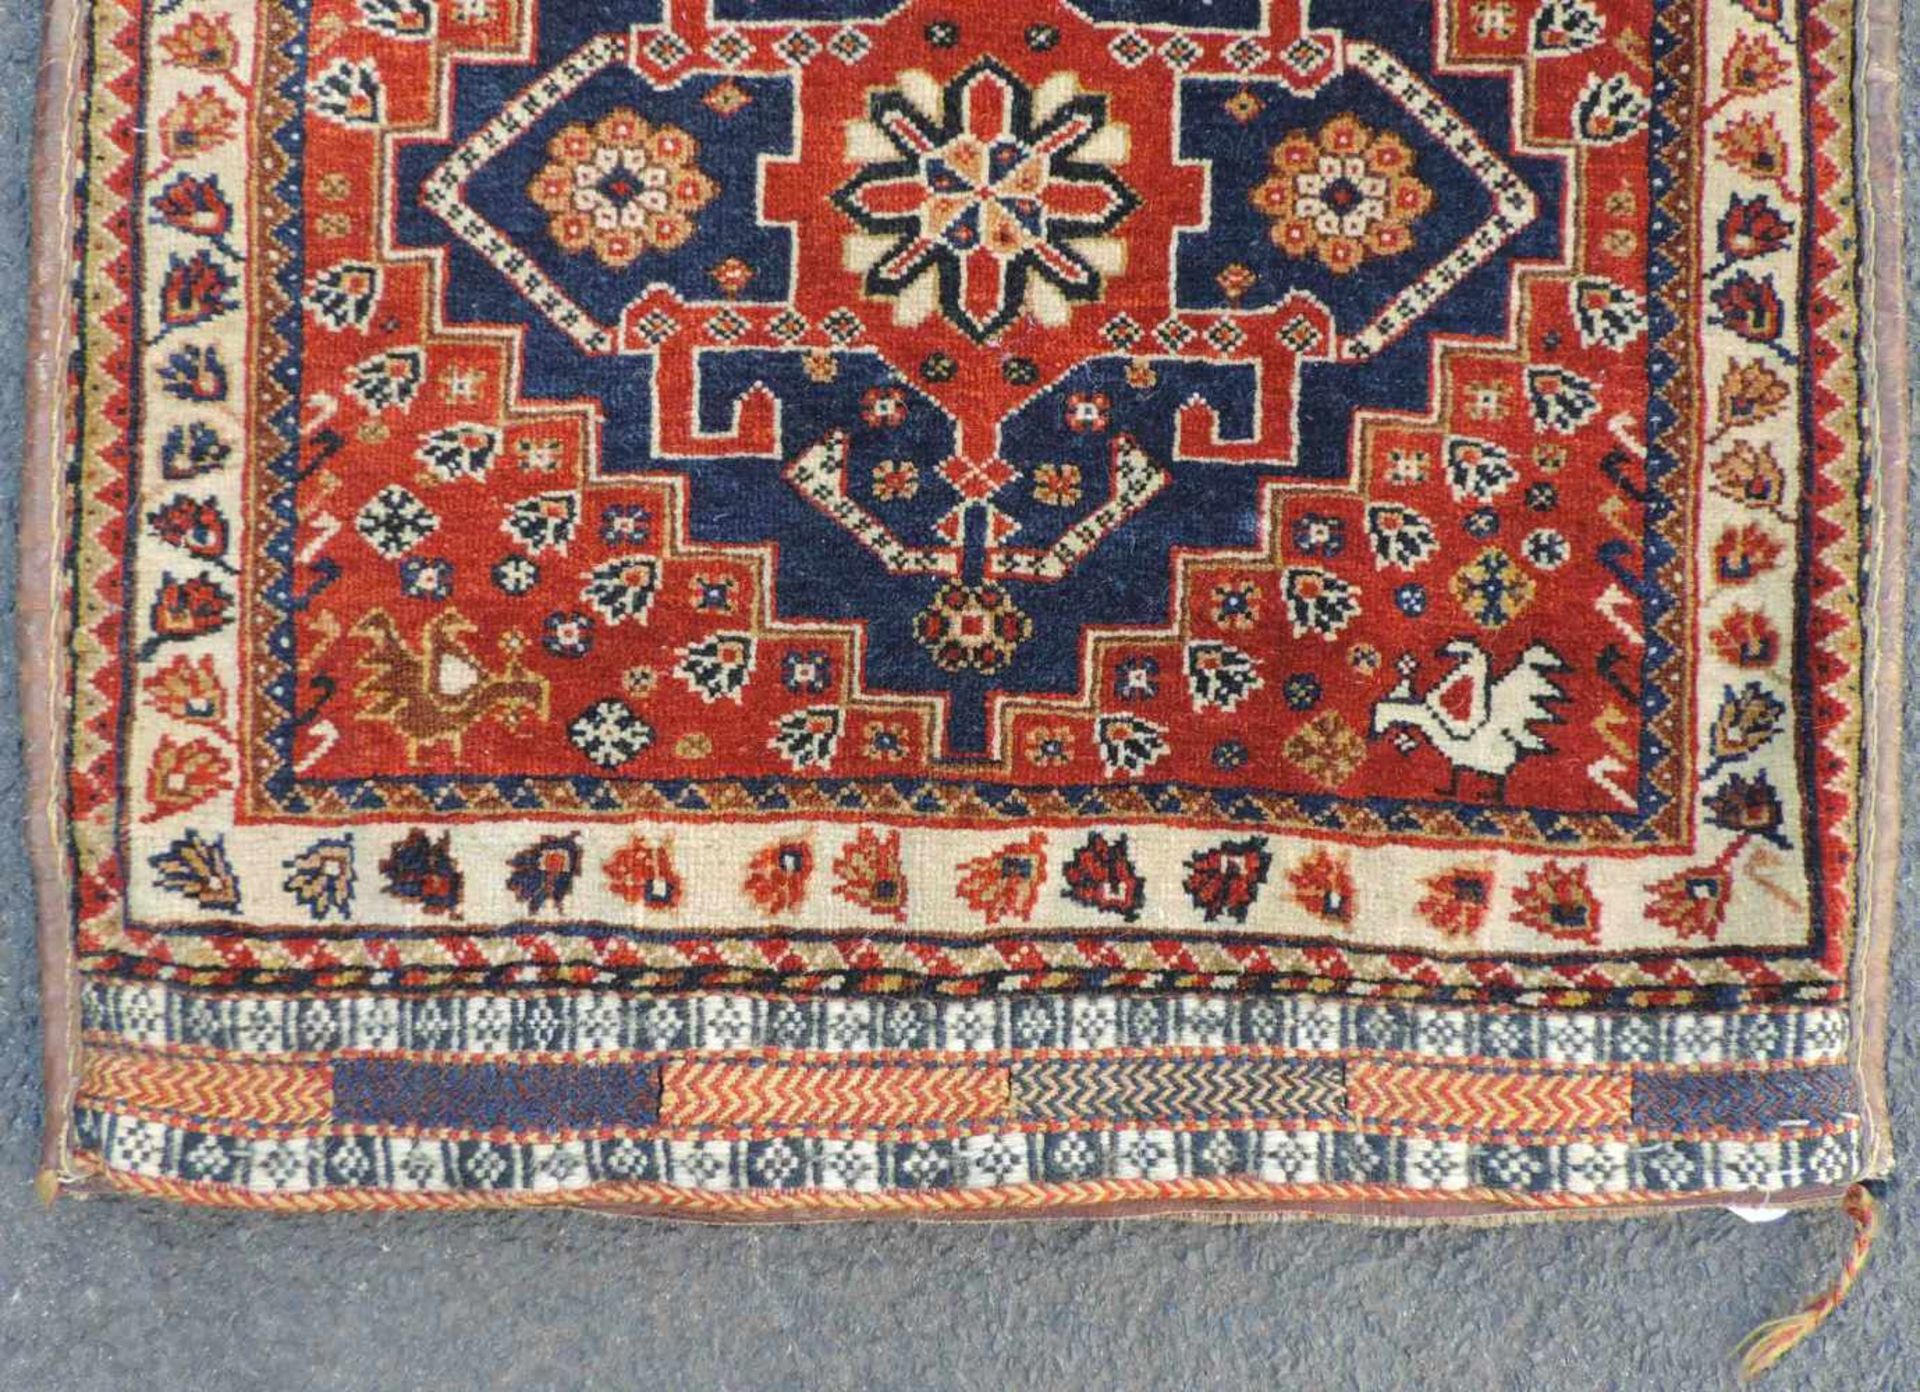 Qashqai / Kaschkai Perserteppich. Iran. Antik um 1910. Naturfarben.61 cm x 62 cm. Handgeknüpft. - Image 2 of 4